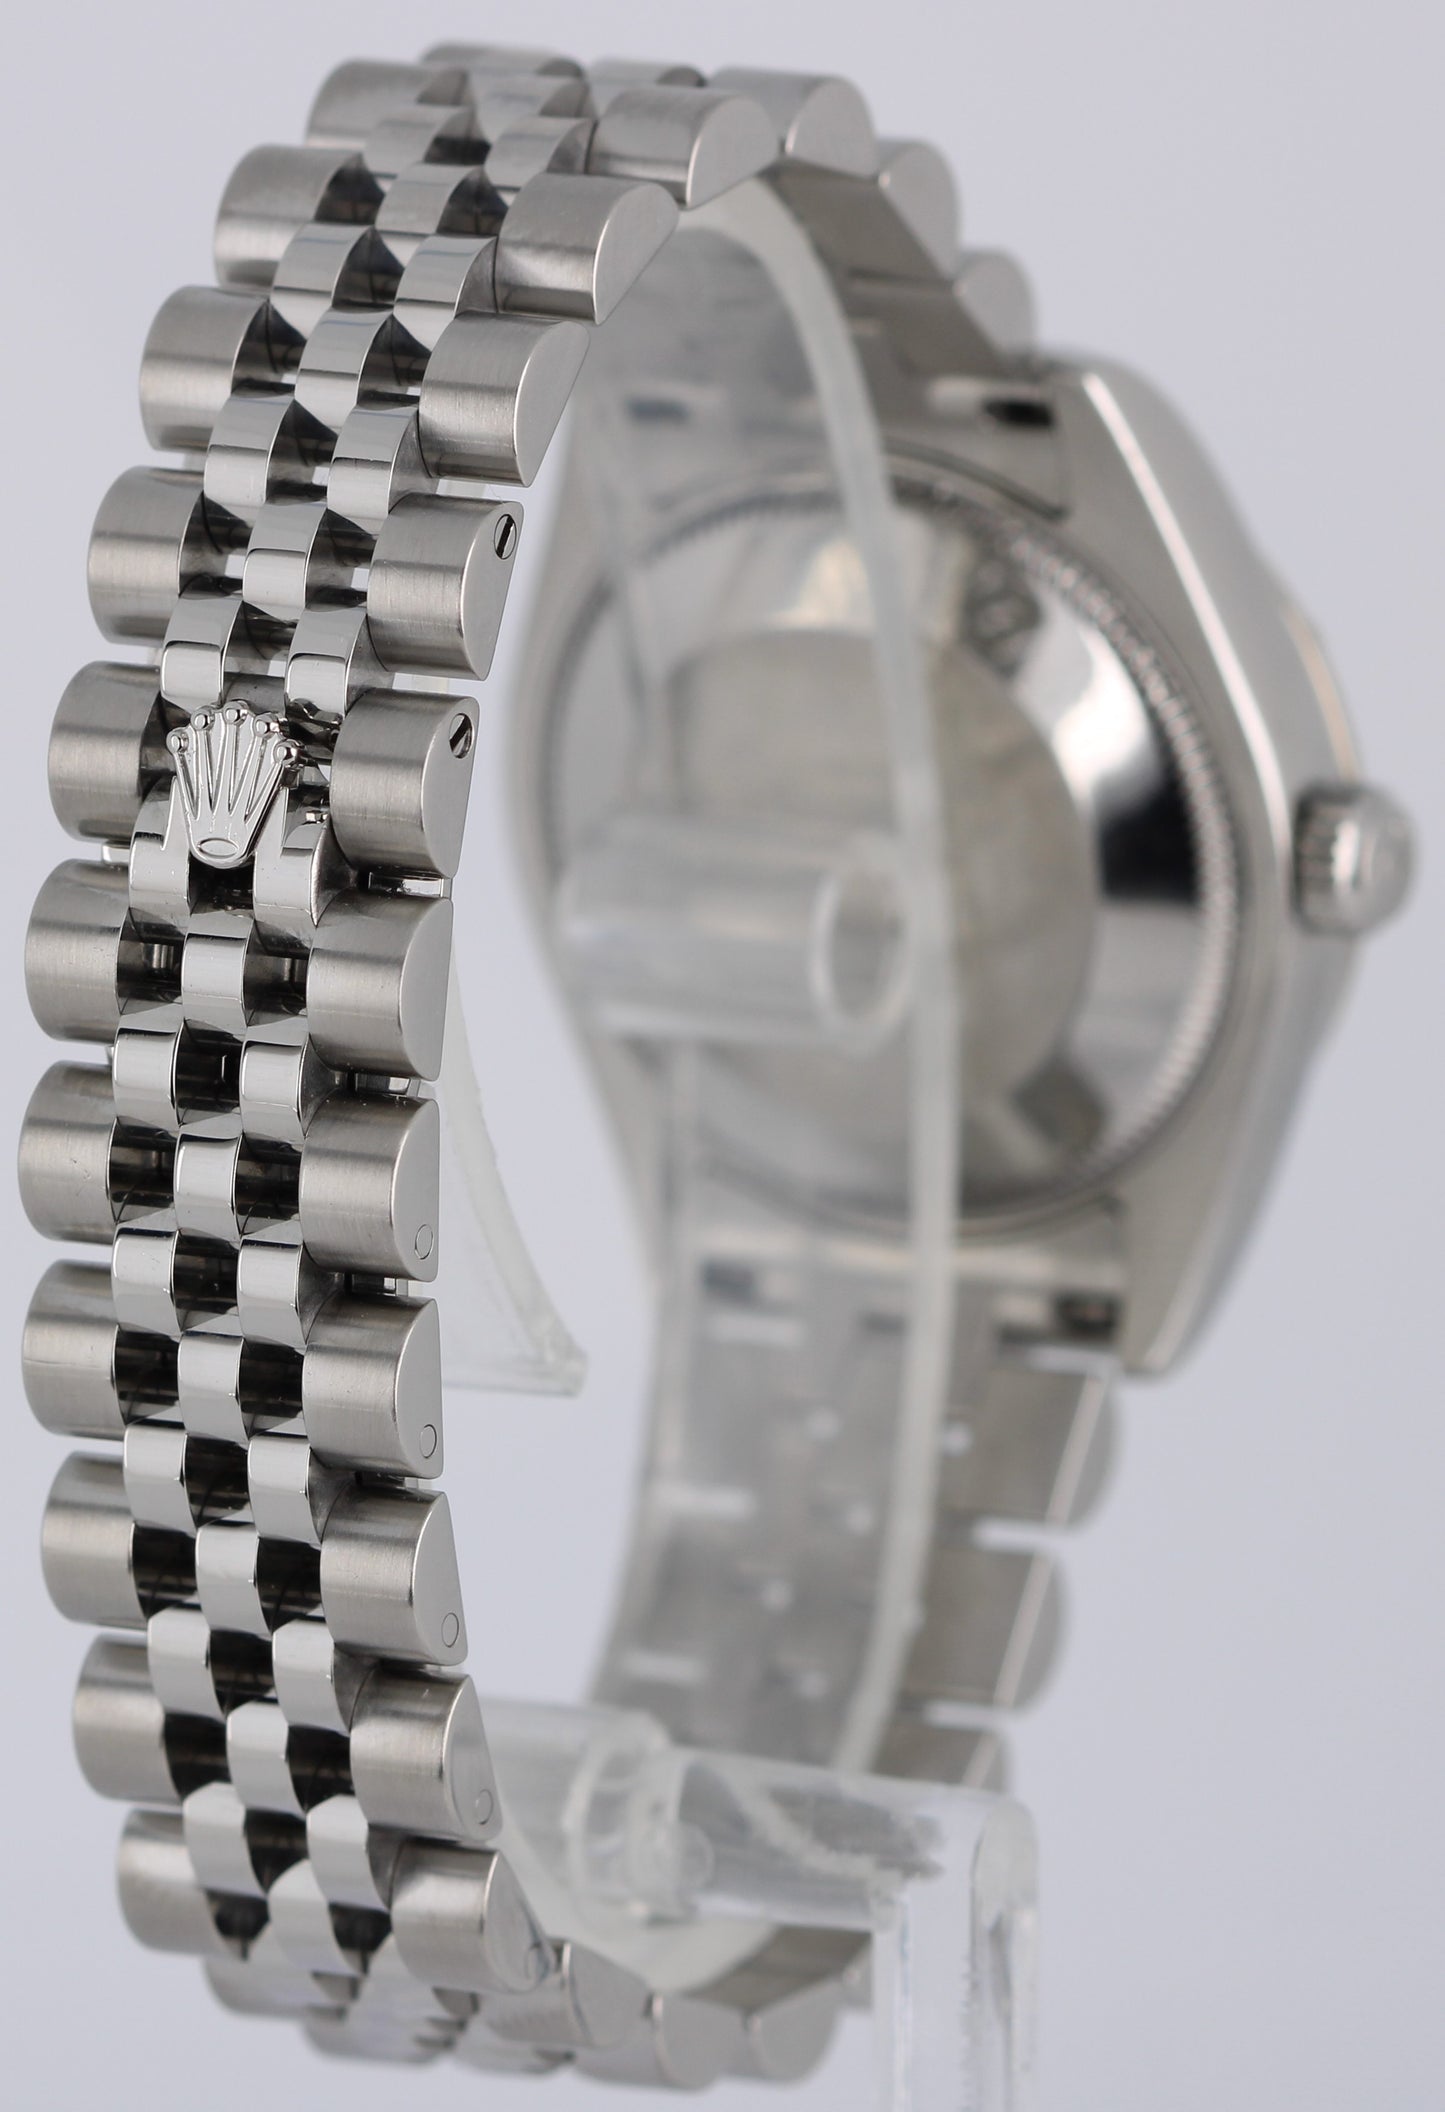 Rolex DateJust 31 Stainless Steel DIAMOND Pink 31mm Jubilee 178344 Watch